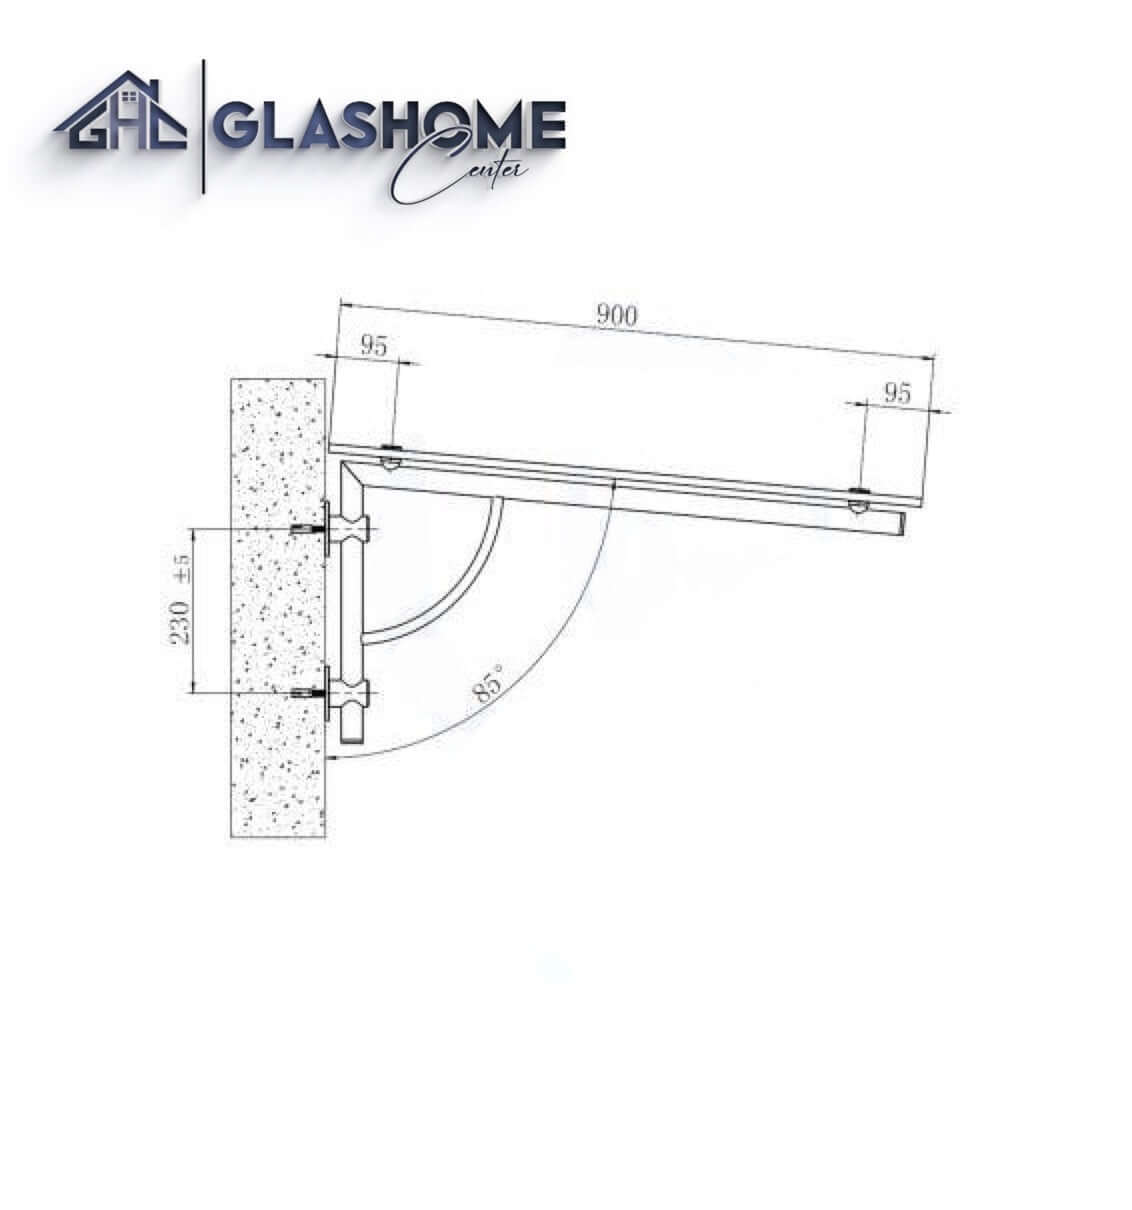 GlasHomeCenter - glass canopy - Clear glass - 160x90cm - 13.1mm VSG - incl. 2 Edelstahlhalterungen Variant "Athens"